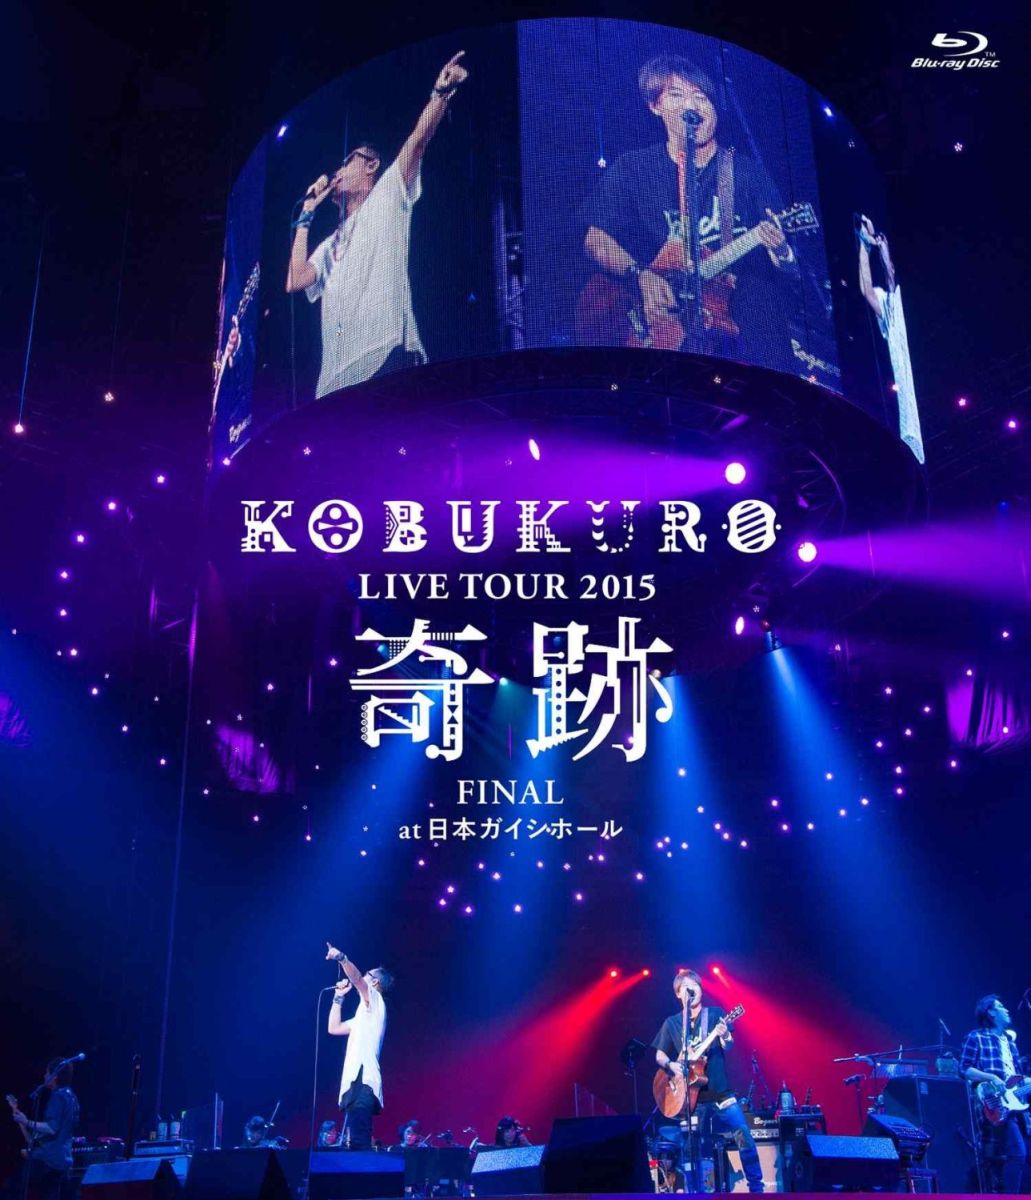 KOBUKURO LIVE TOUR 2015 “奇跡” FINAL at 日本ガイシホール 【初回盤Blu-ray】